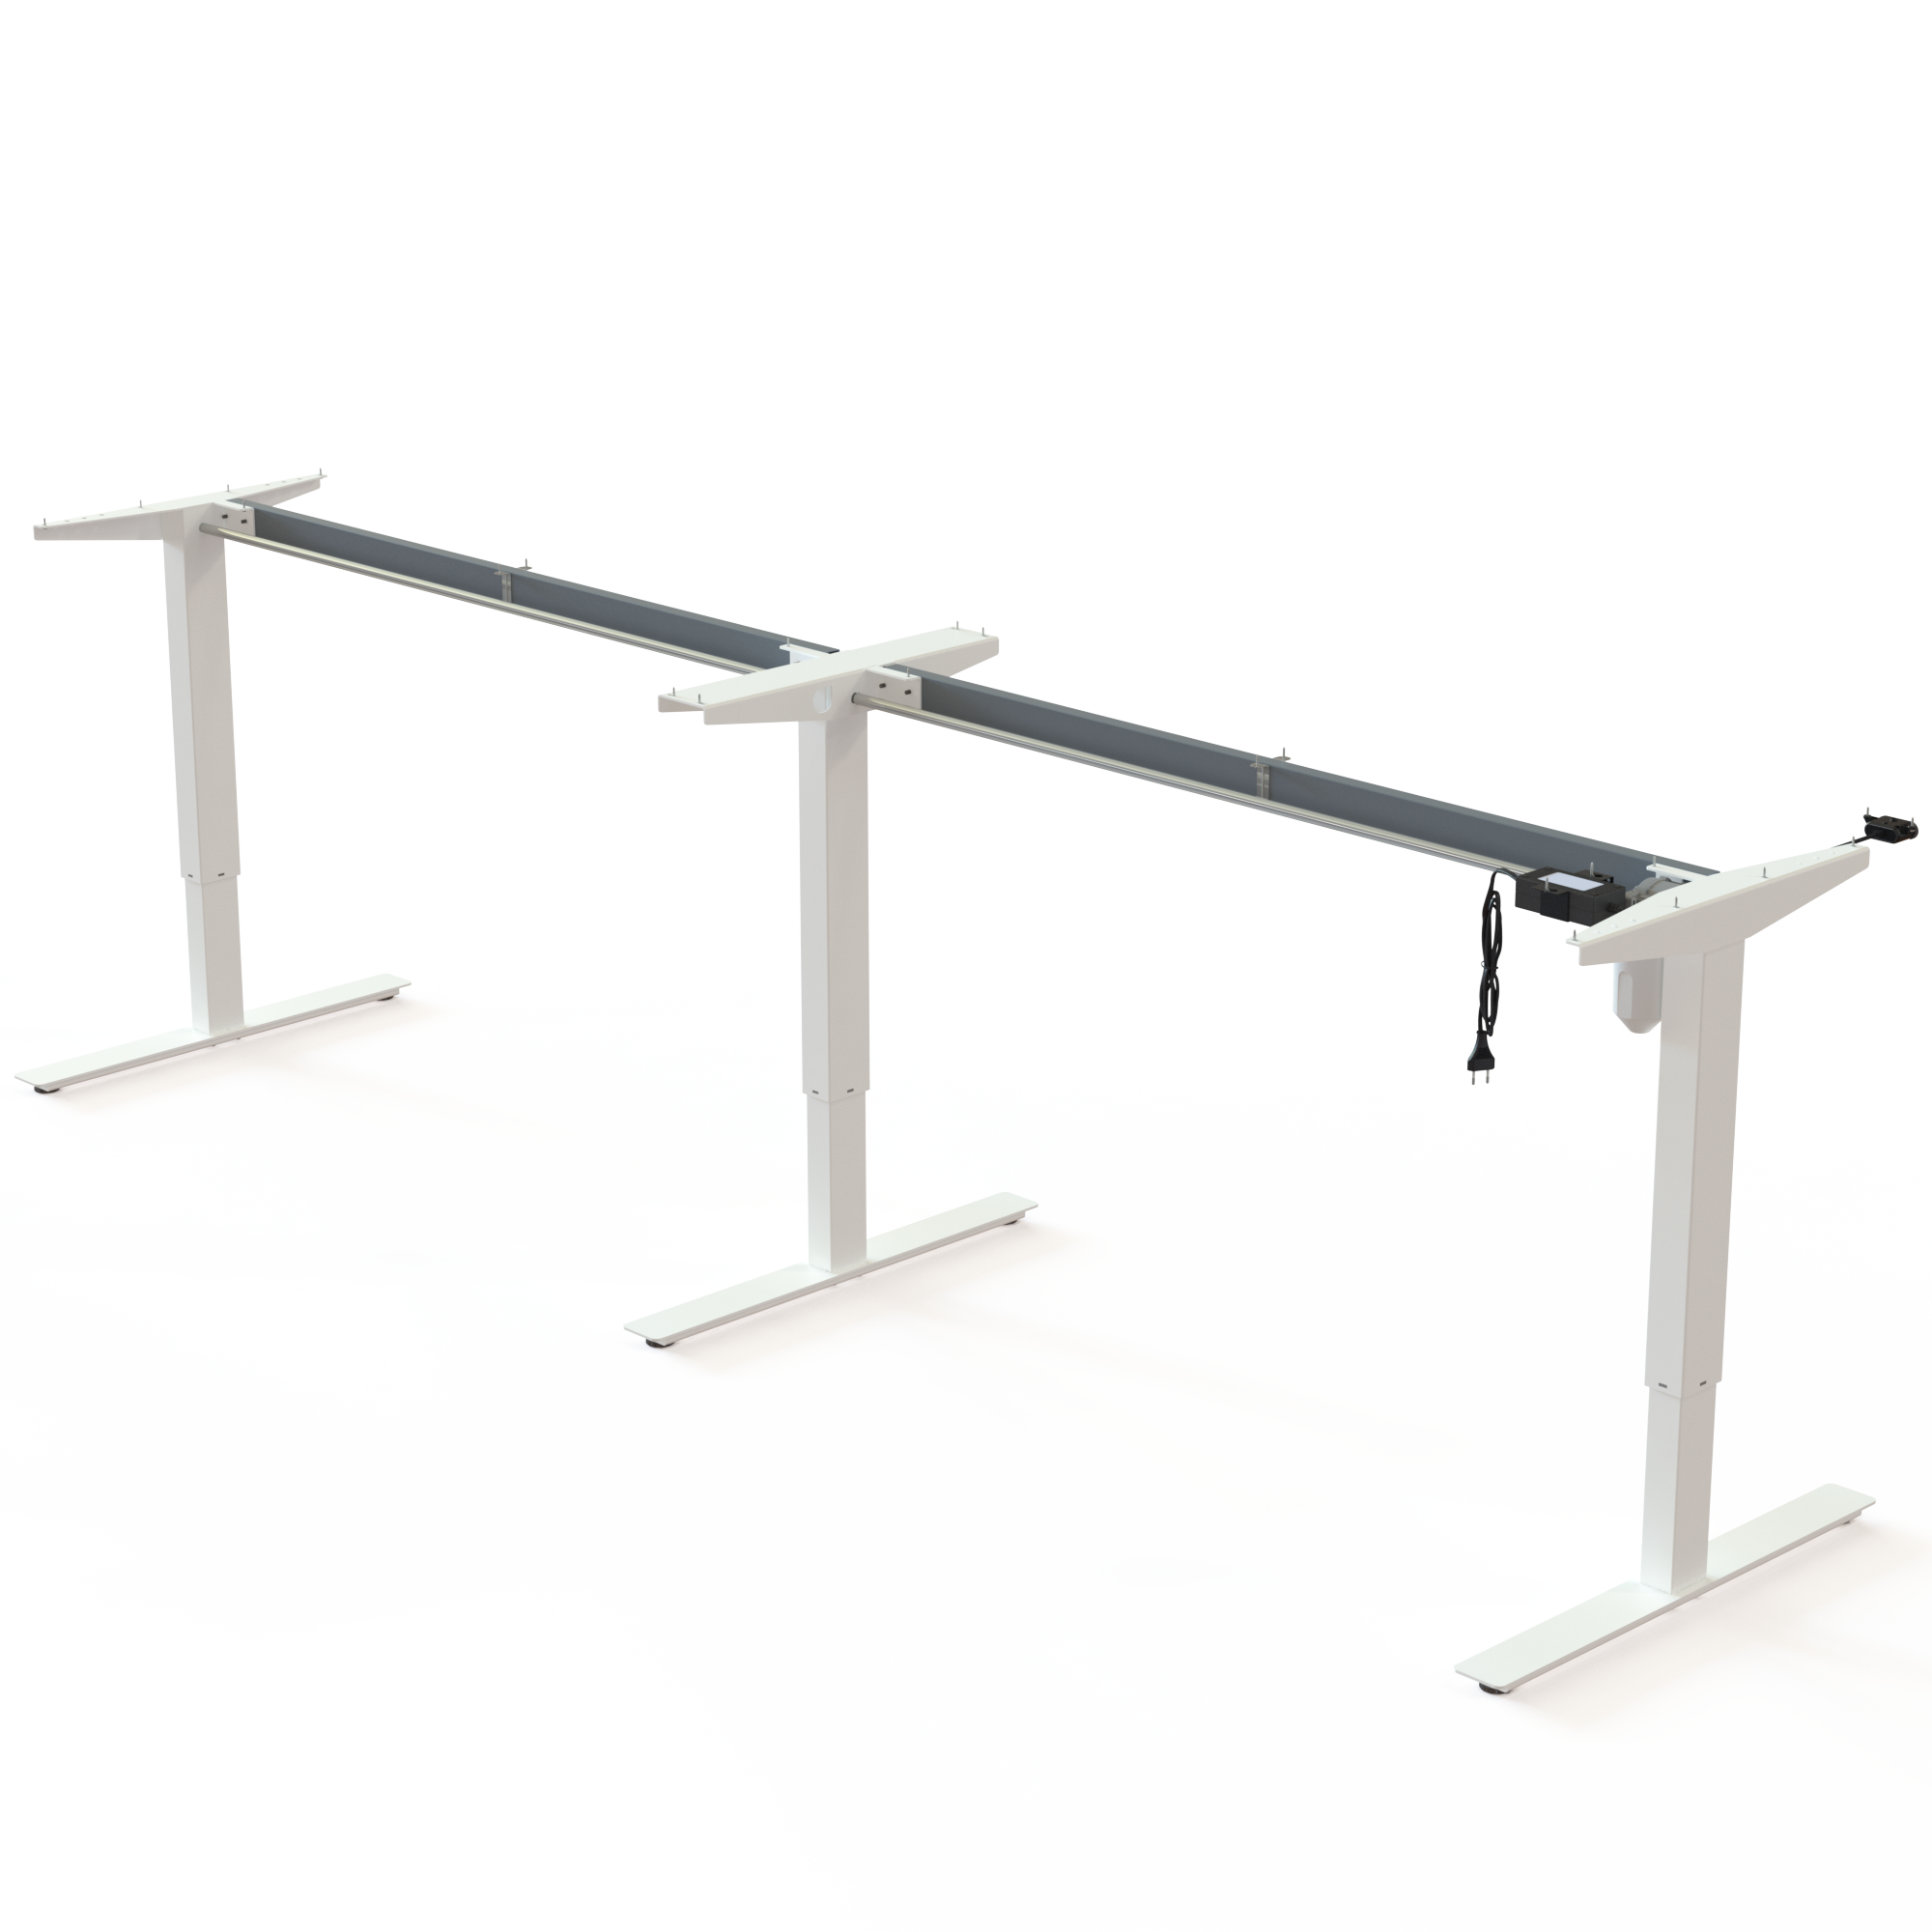 Electric Desk FrameElectric Desk Frame | WidthWidth 302 cmcm | White